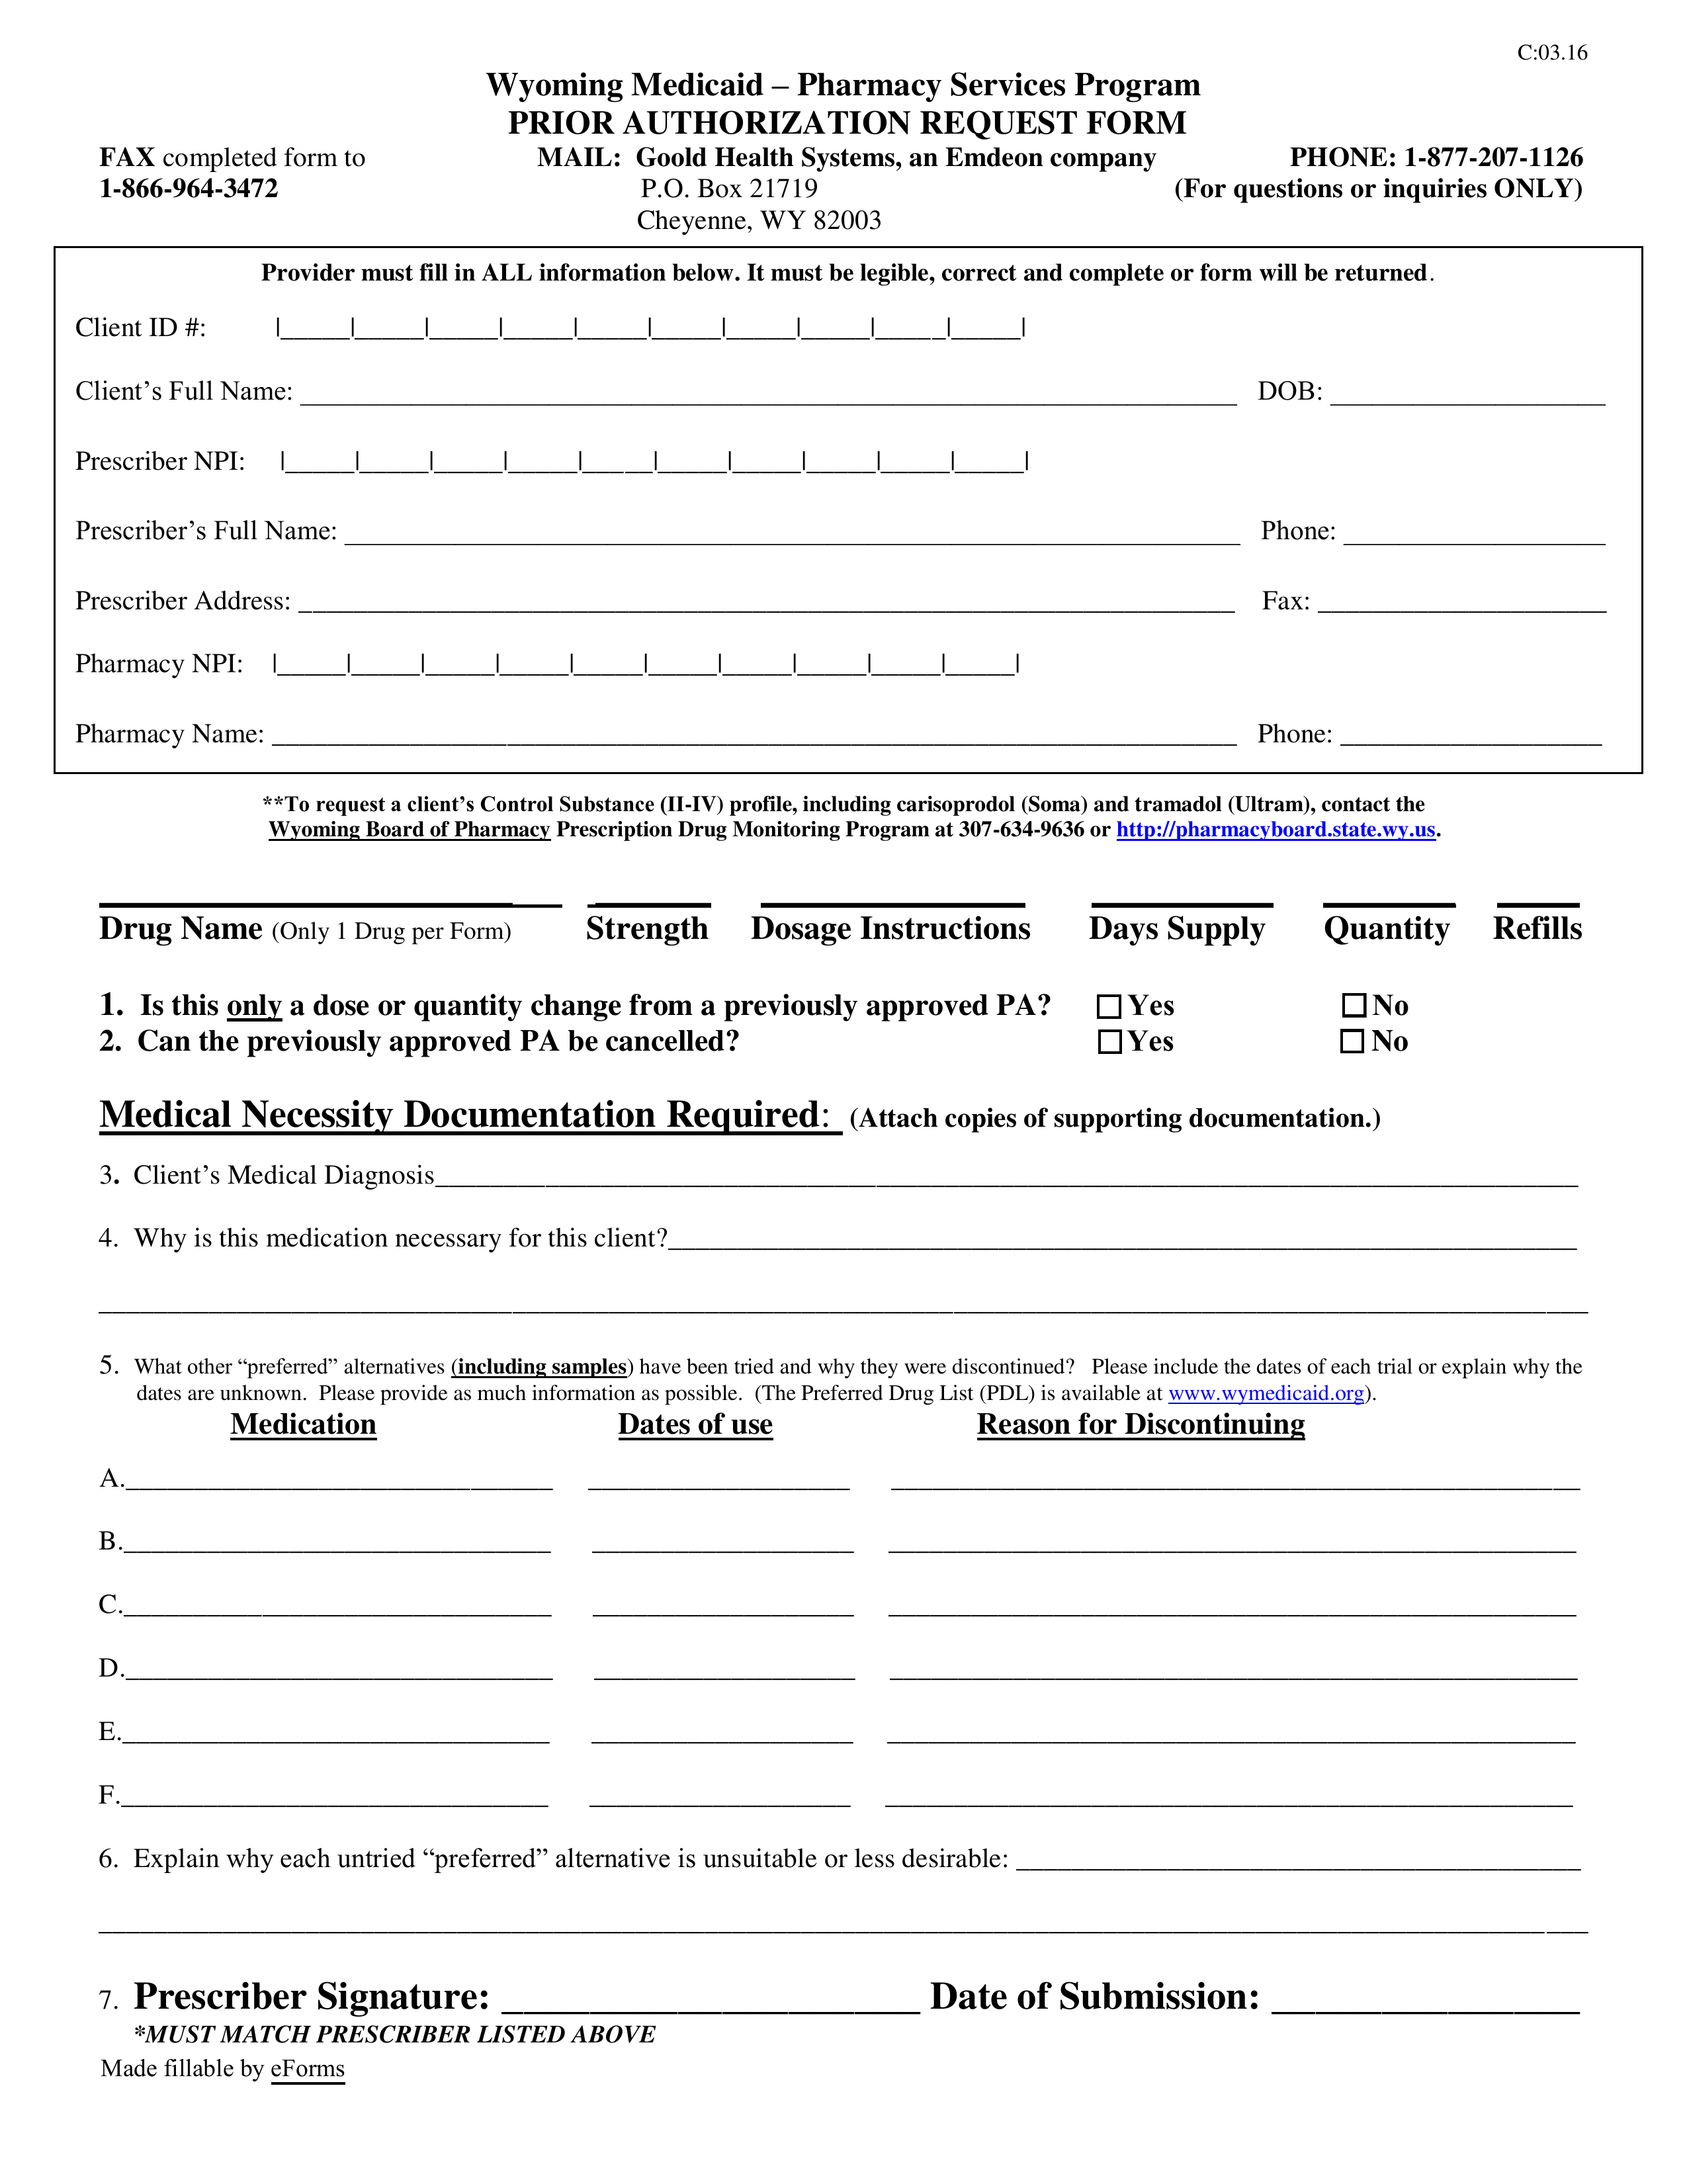 Free Wyoming Medicaid Prior (Rx) Authorization Form - PDF ...